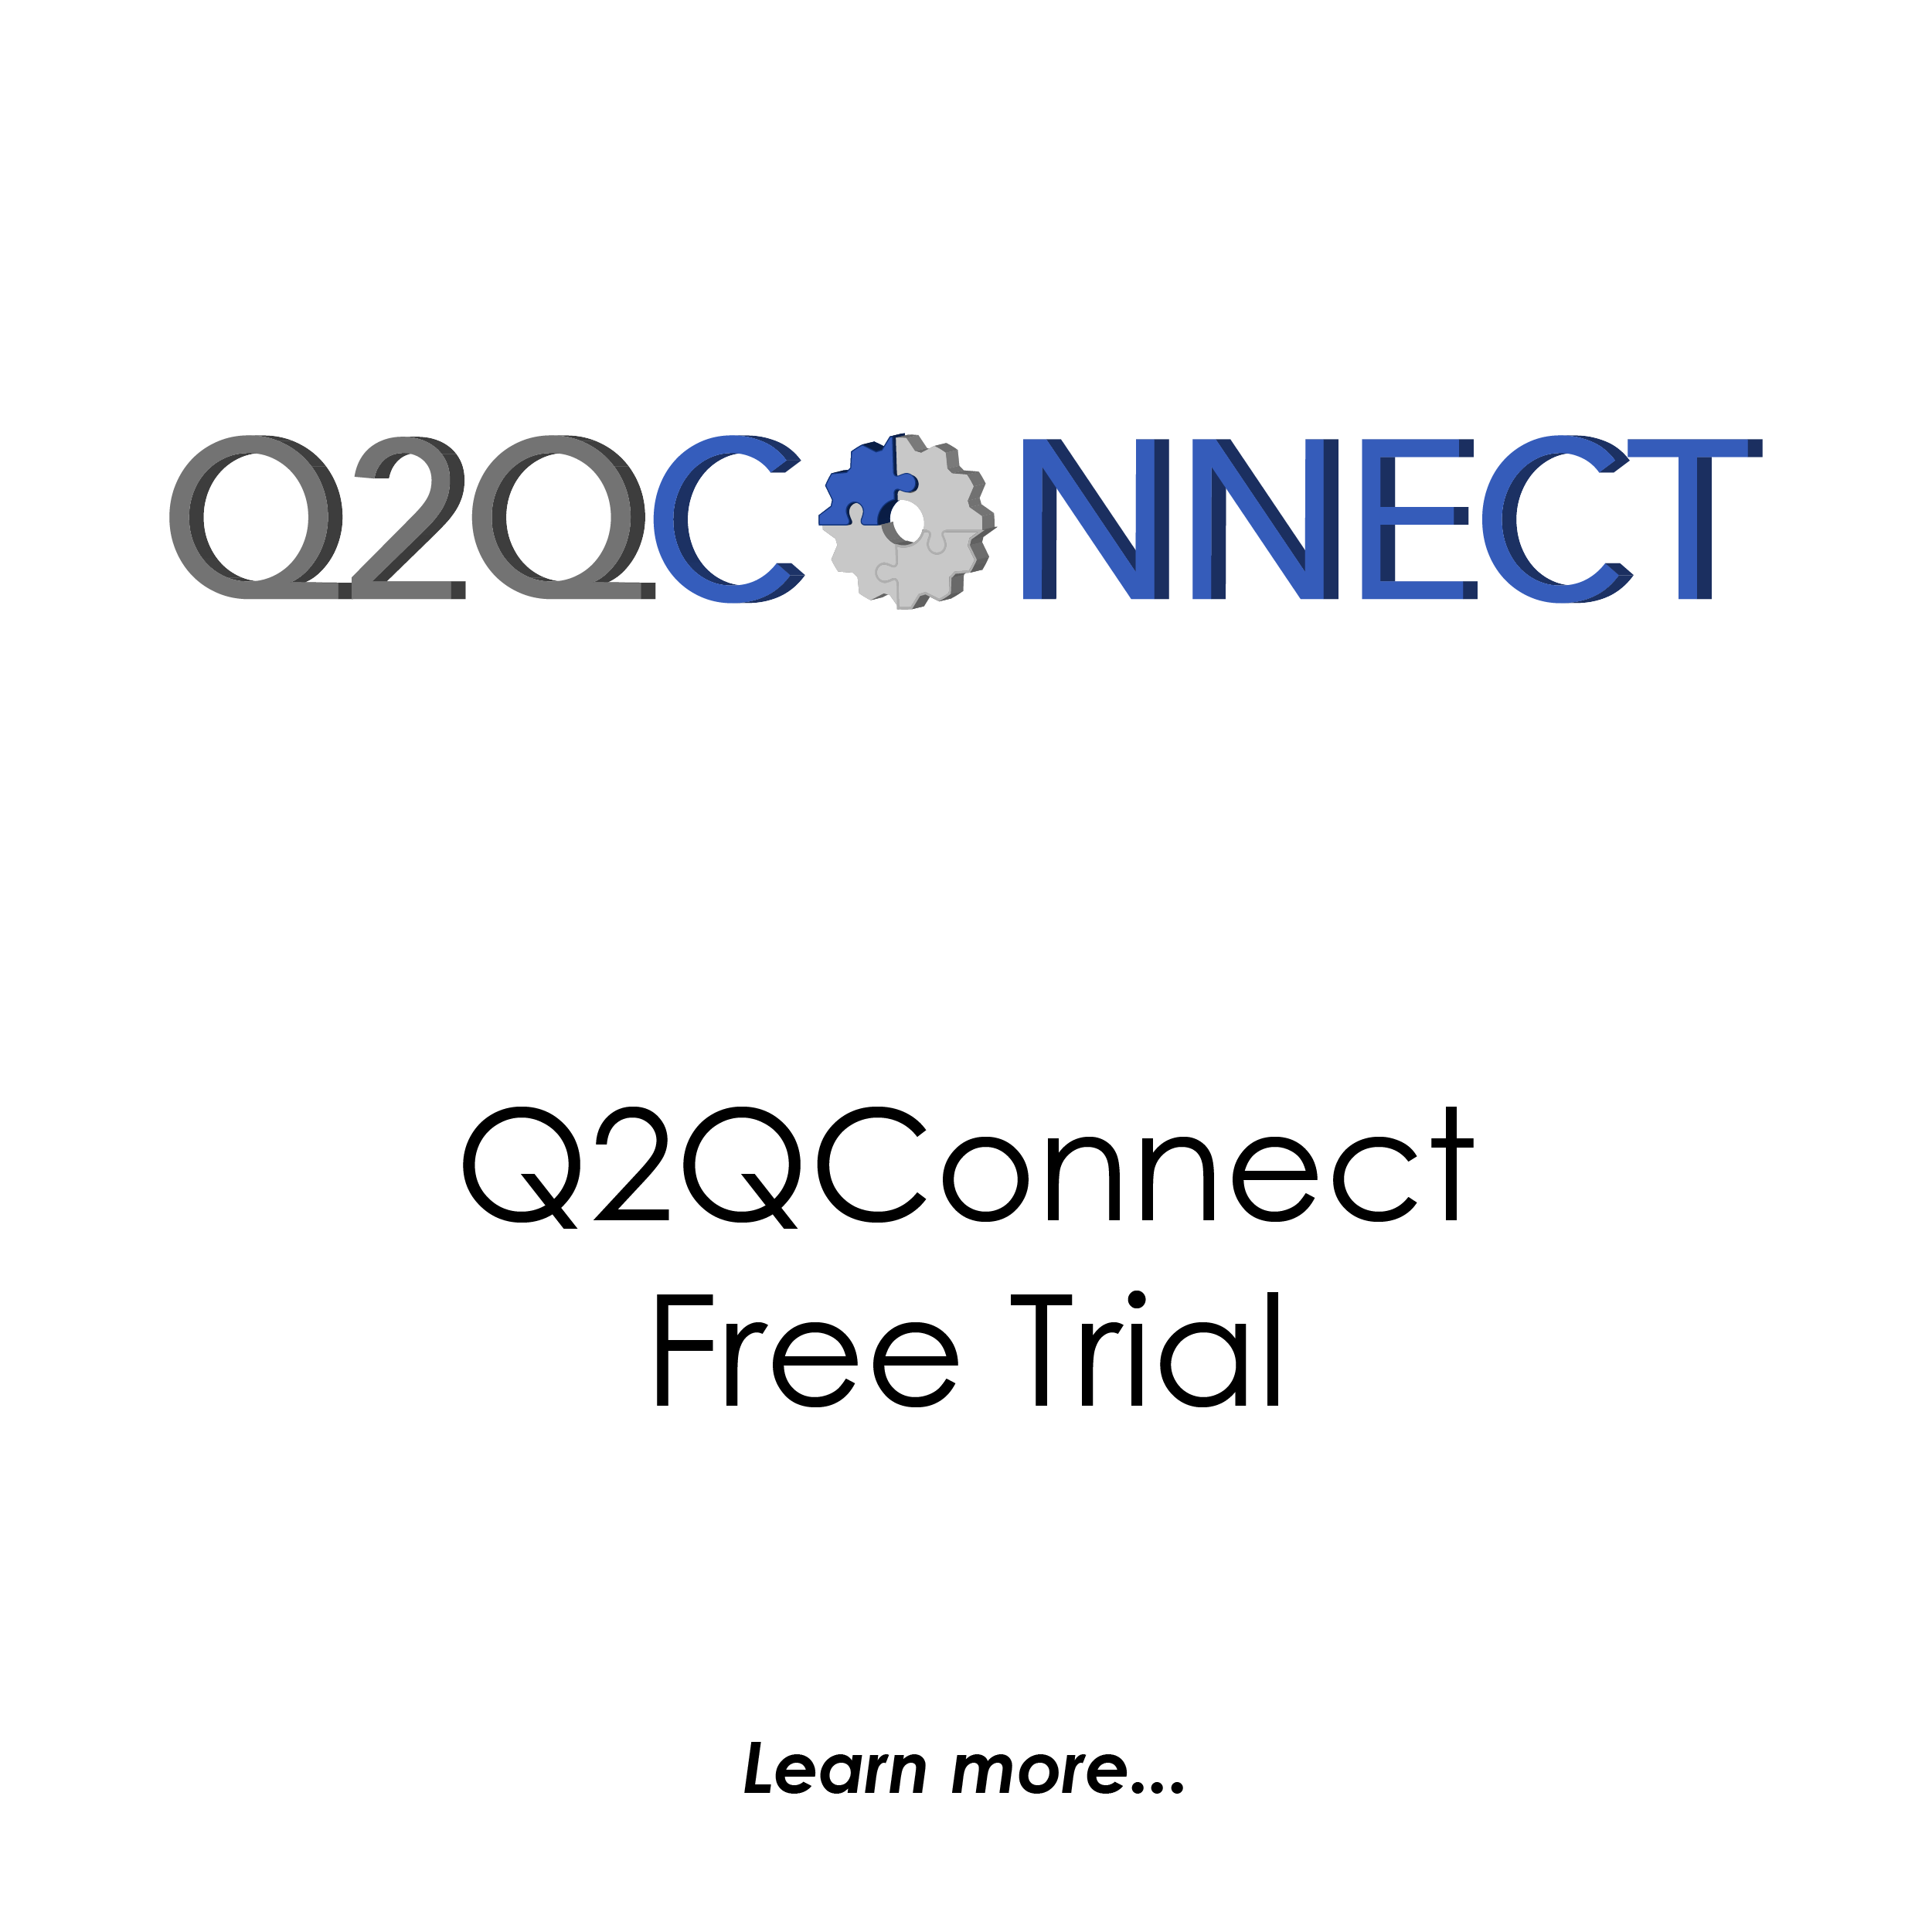 Q2QCONNECT